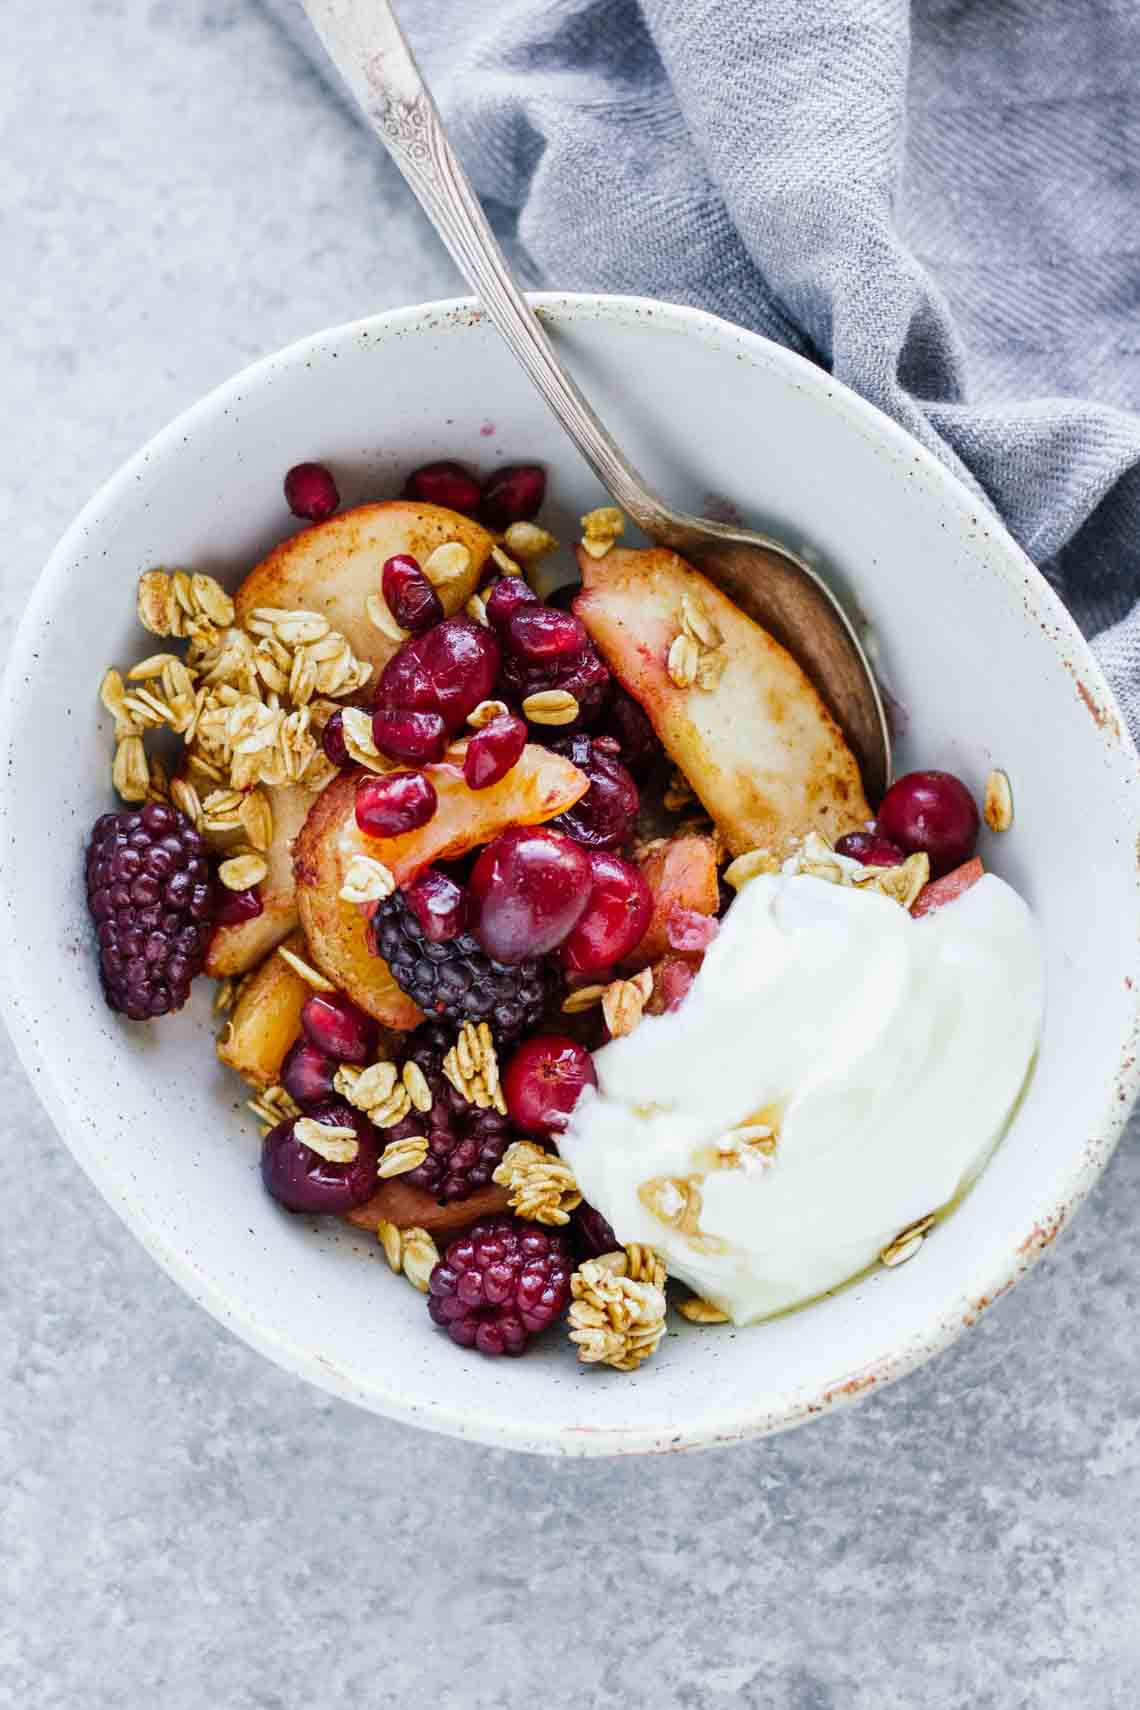 Healthy Vegan Breakfast Ideas
 27 Healthy Vegan Winter Breakfast Recipes to Supercharge